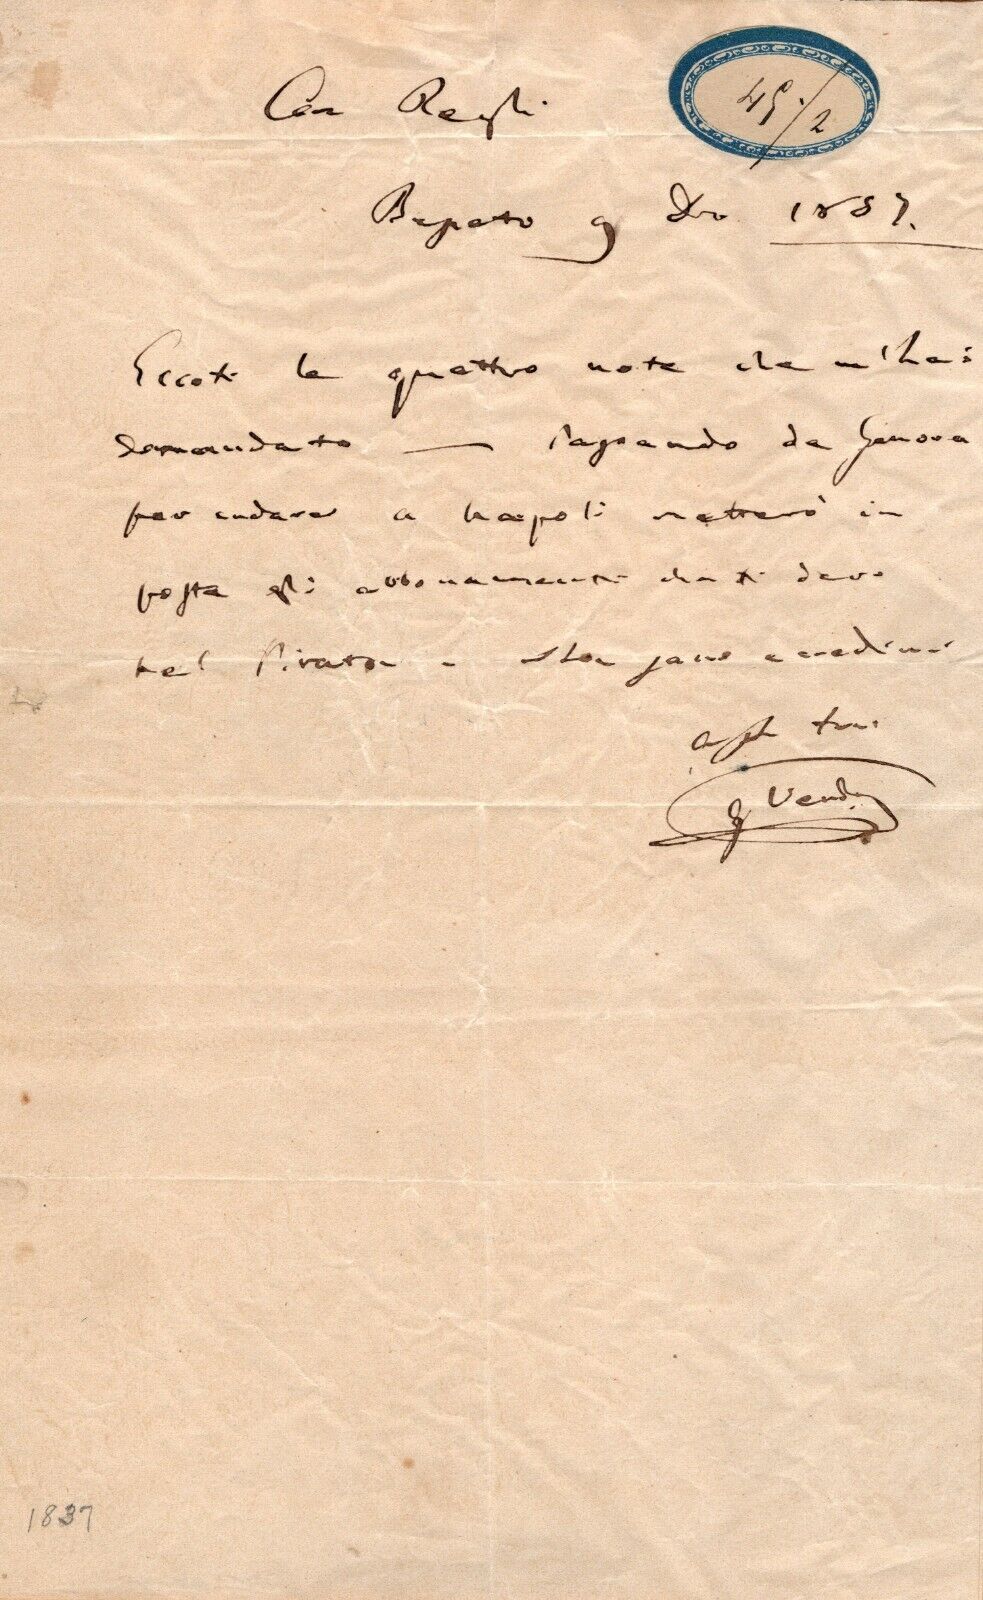 Giuseppe Verdi - Autograph Letter Signed - Italian Composer - 19th Century LOA